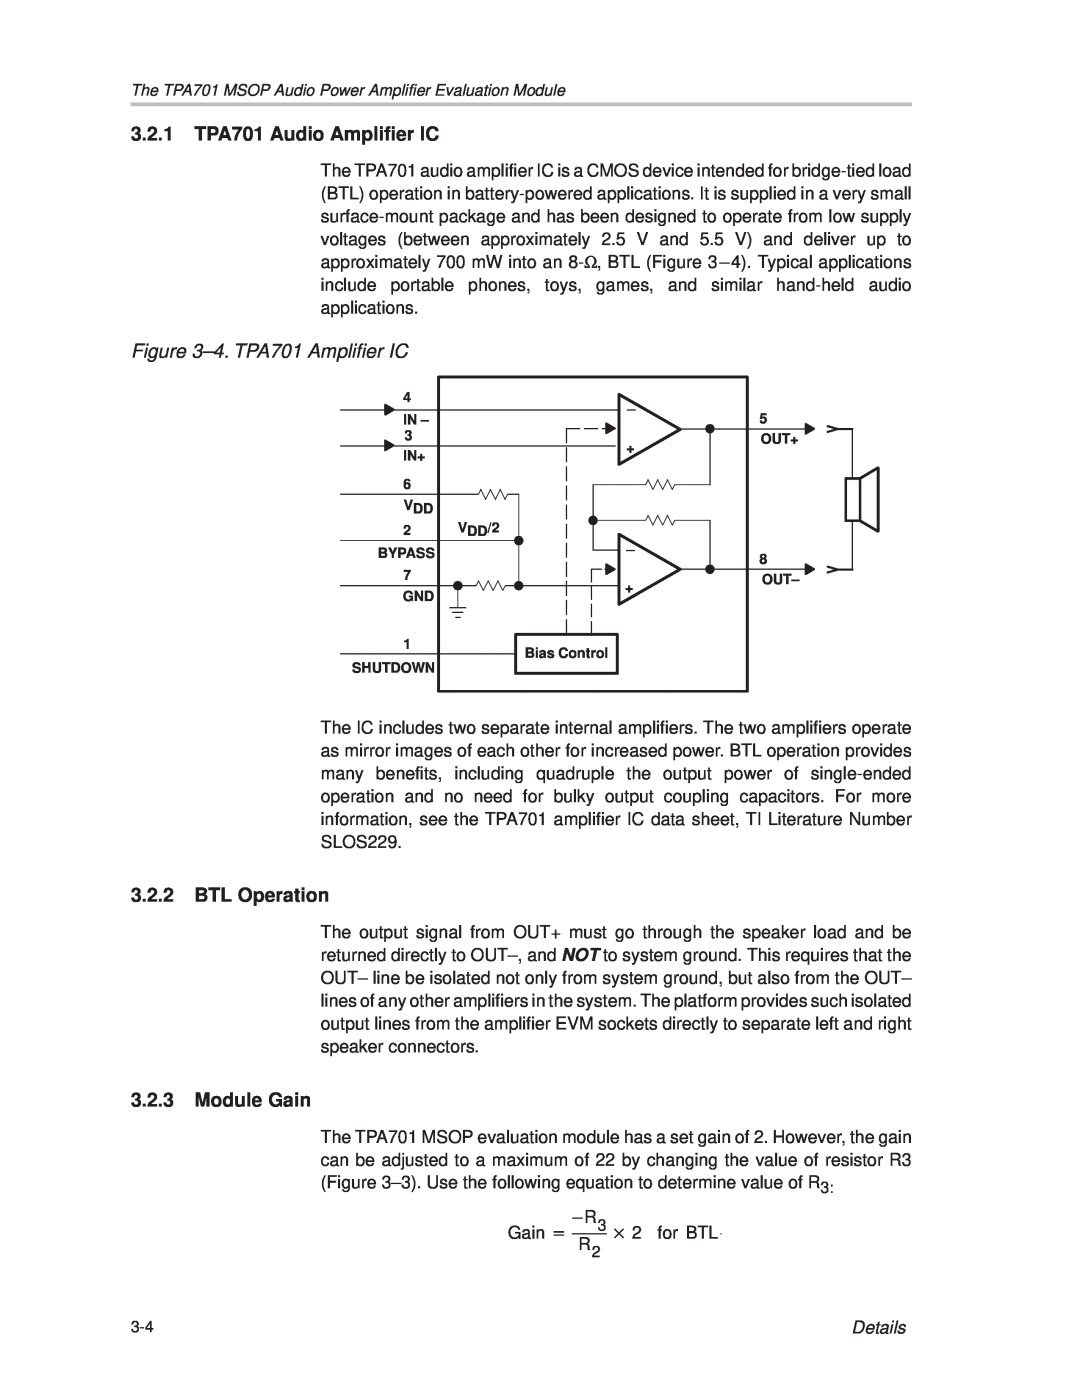 Texas Instruments manual 3.2.1TPA701 Audio Amplifier IC, ±4. TPA701 Amplifier IC, 3.2.2BTL Operation, 3.2.3Module Gain 